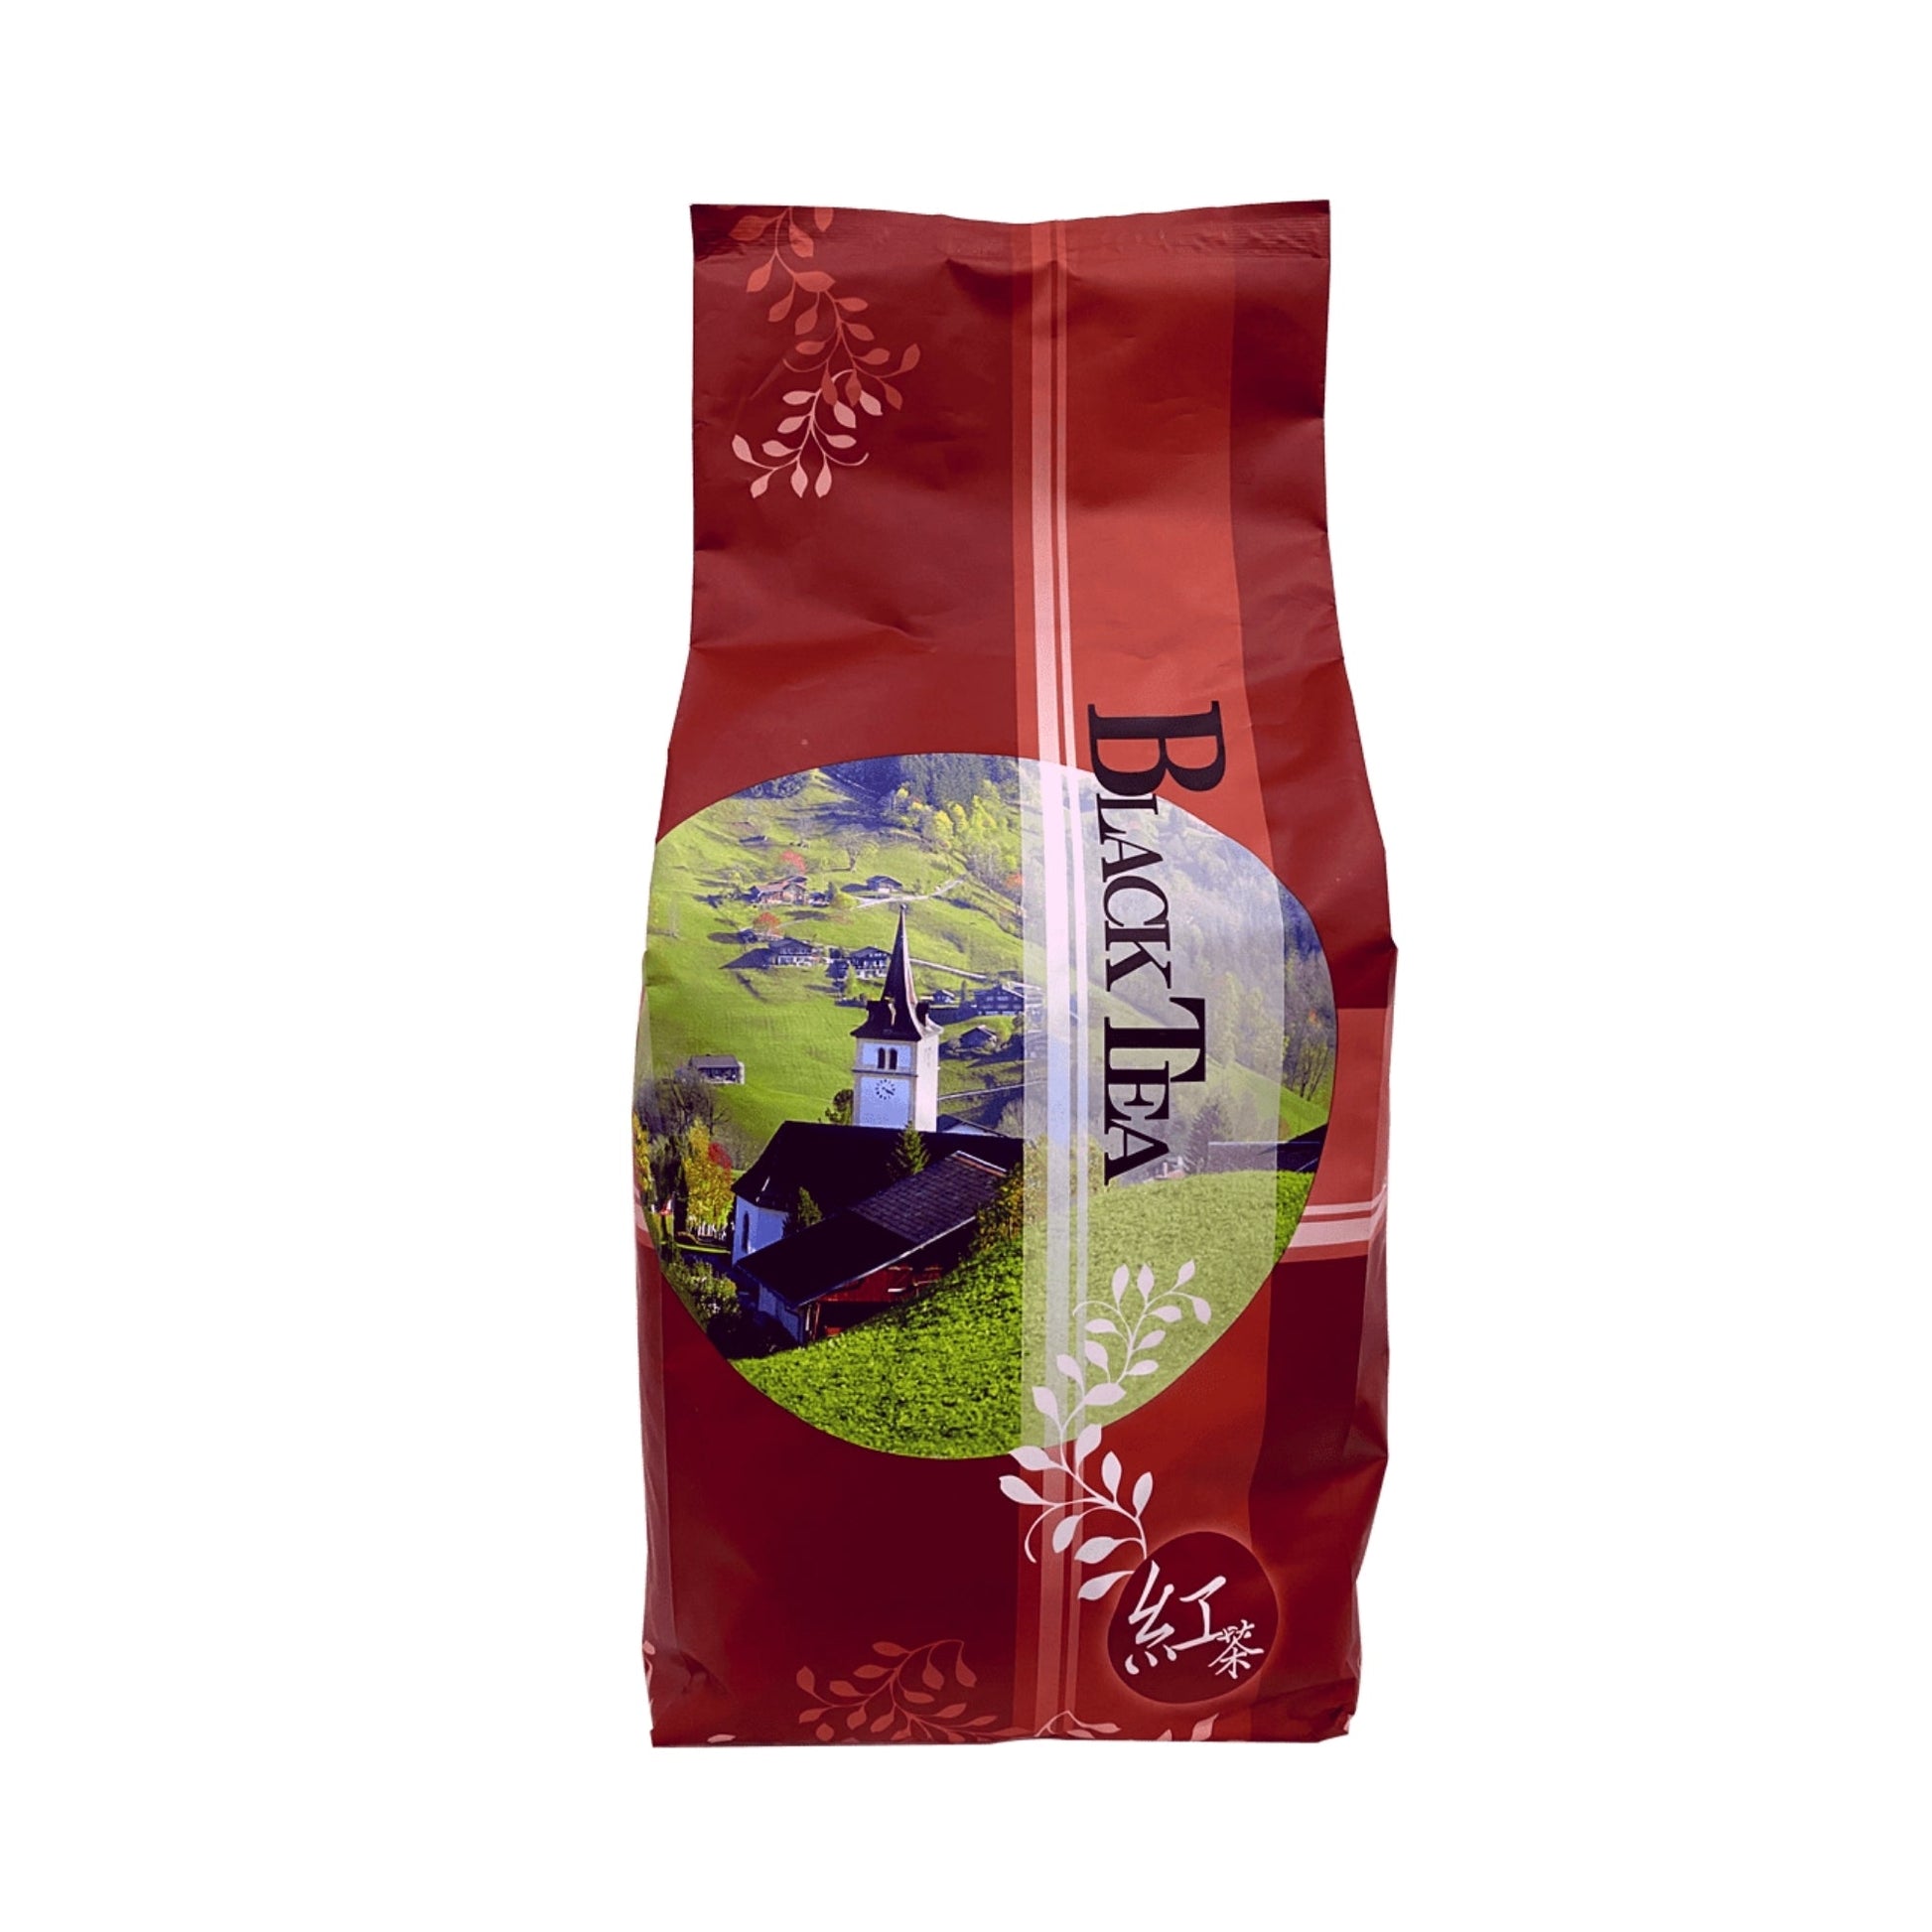 TOP Creamery Ceylon Uva Black Tea 600g - Kreme City Supplies